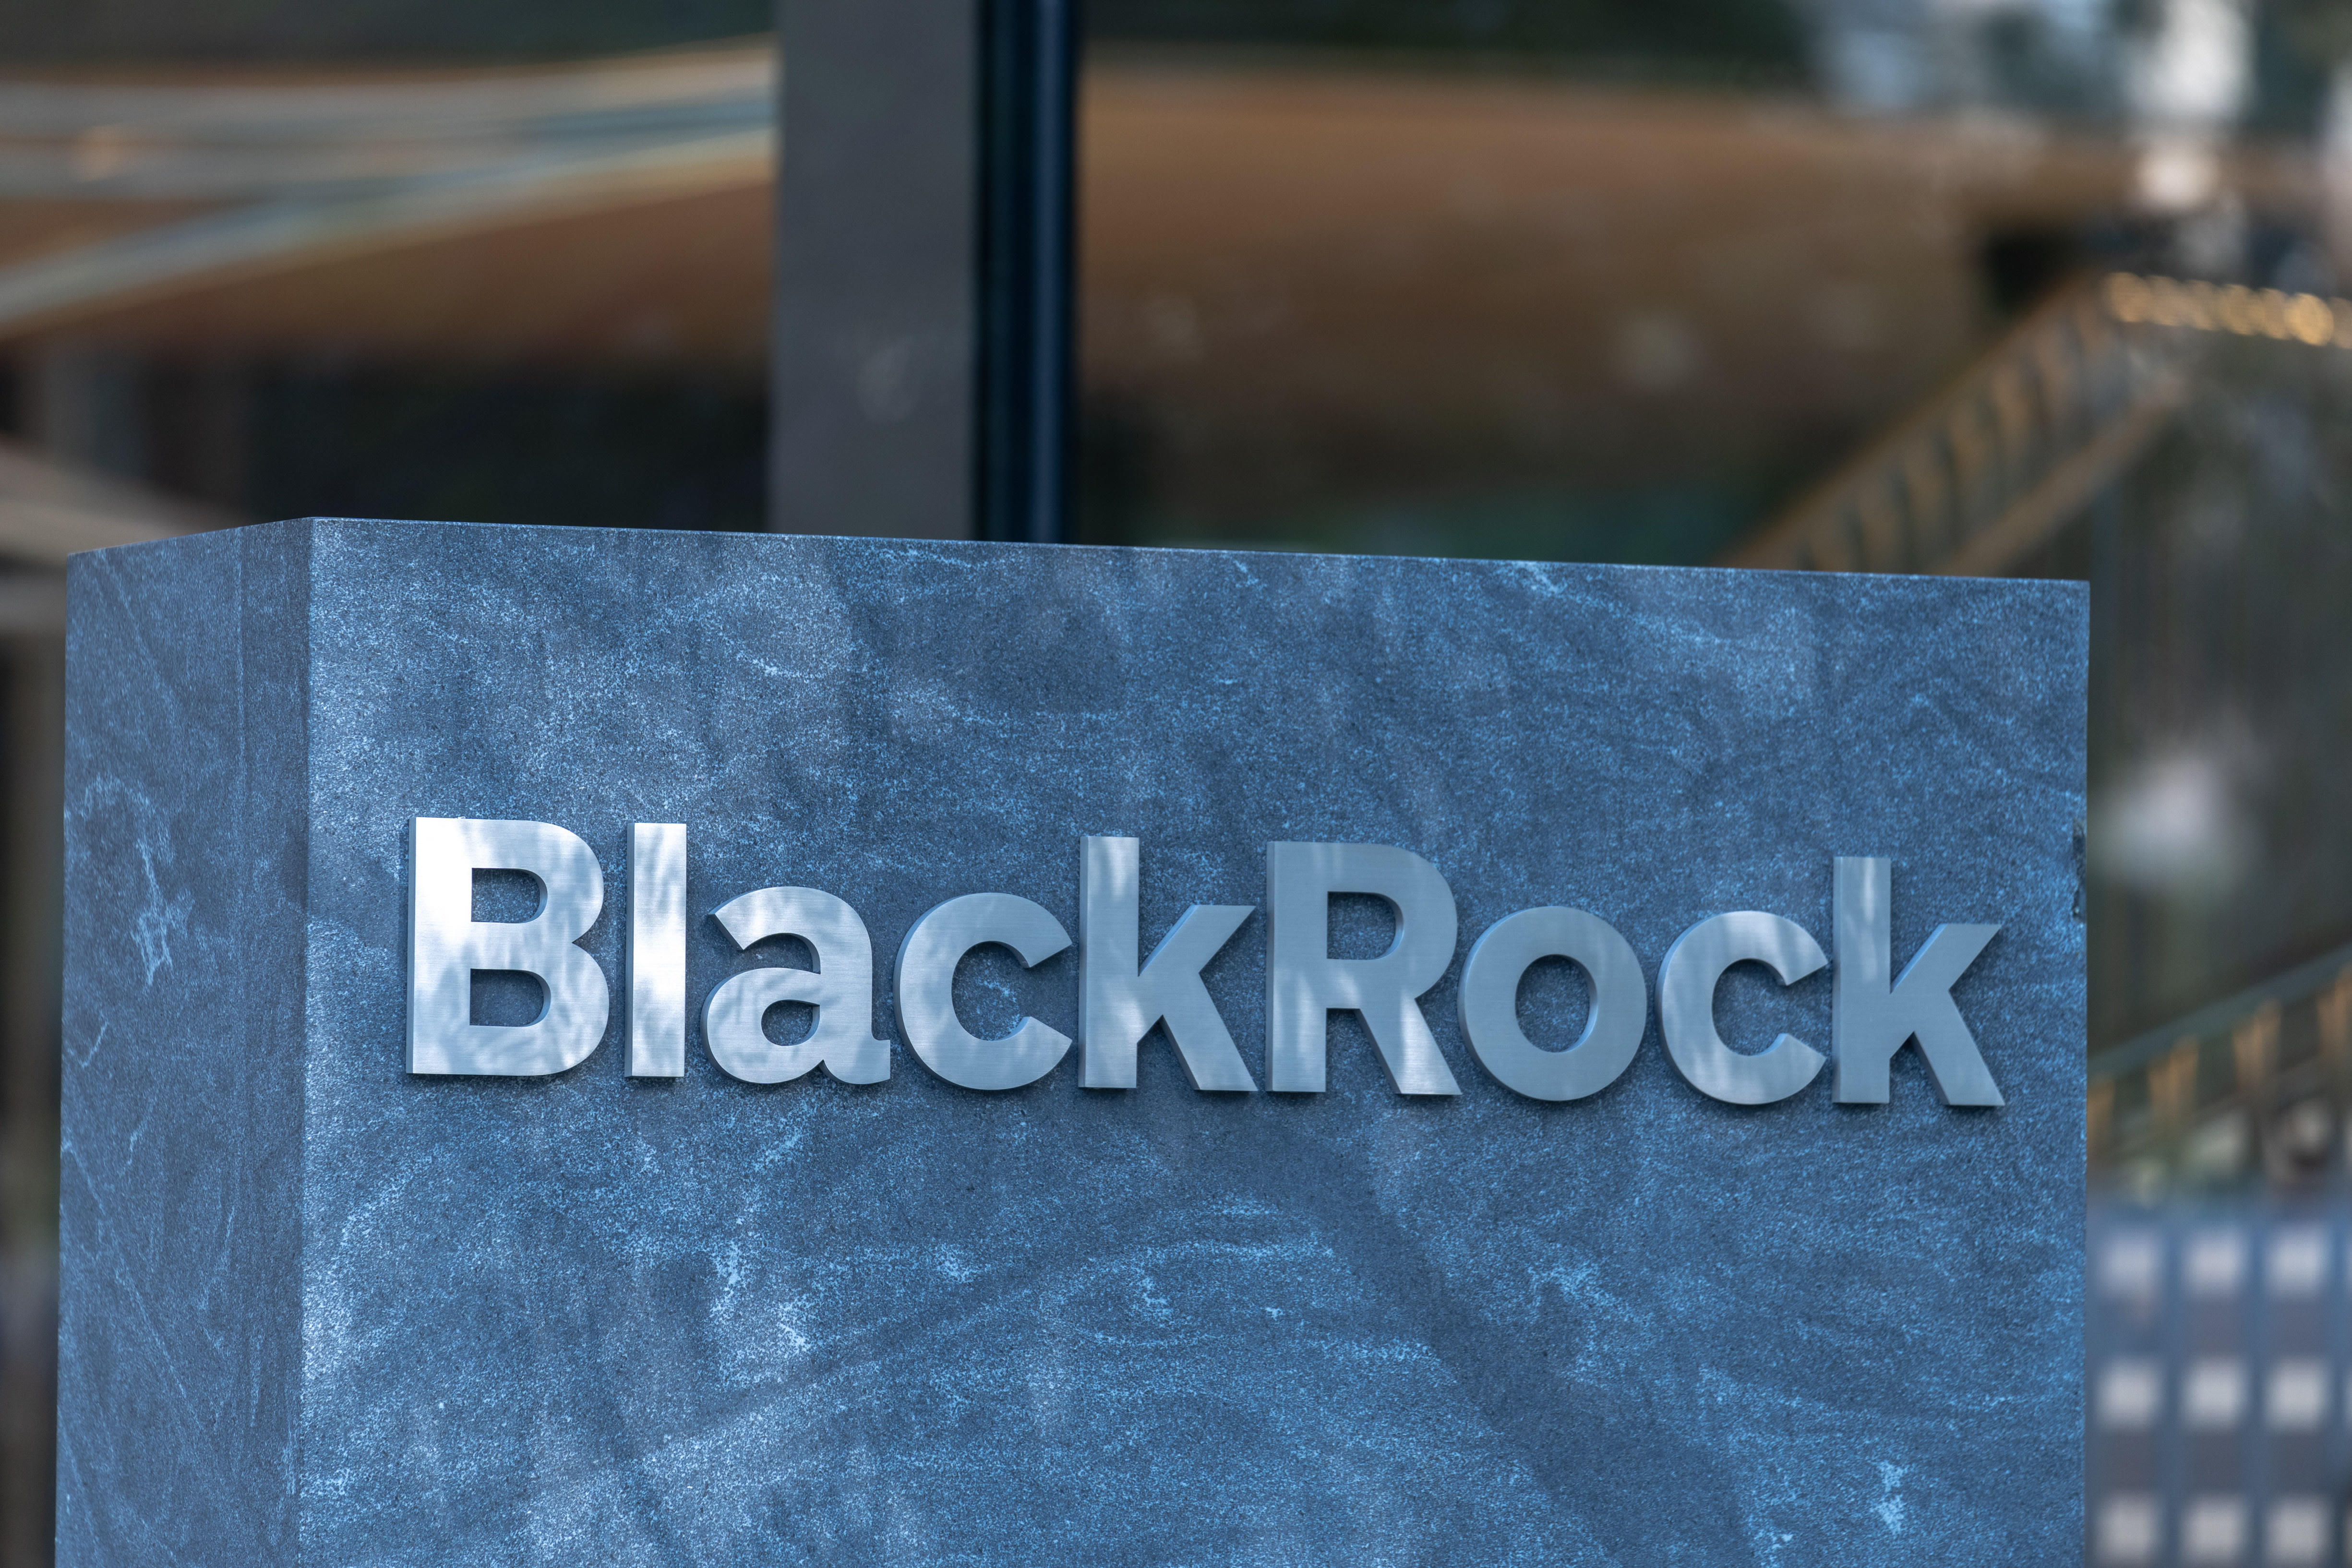 BlackRock says Thomas Matthew Crooks appeared in company ad